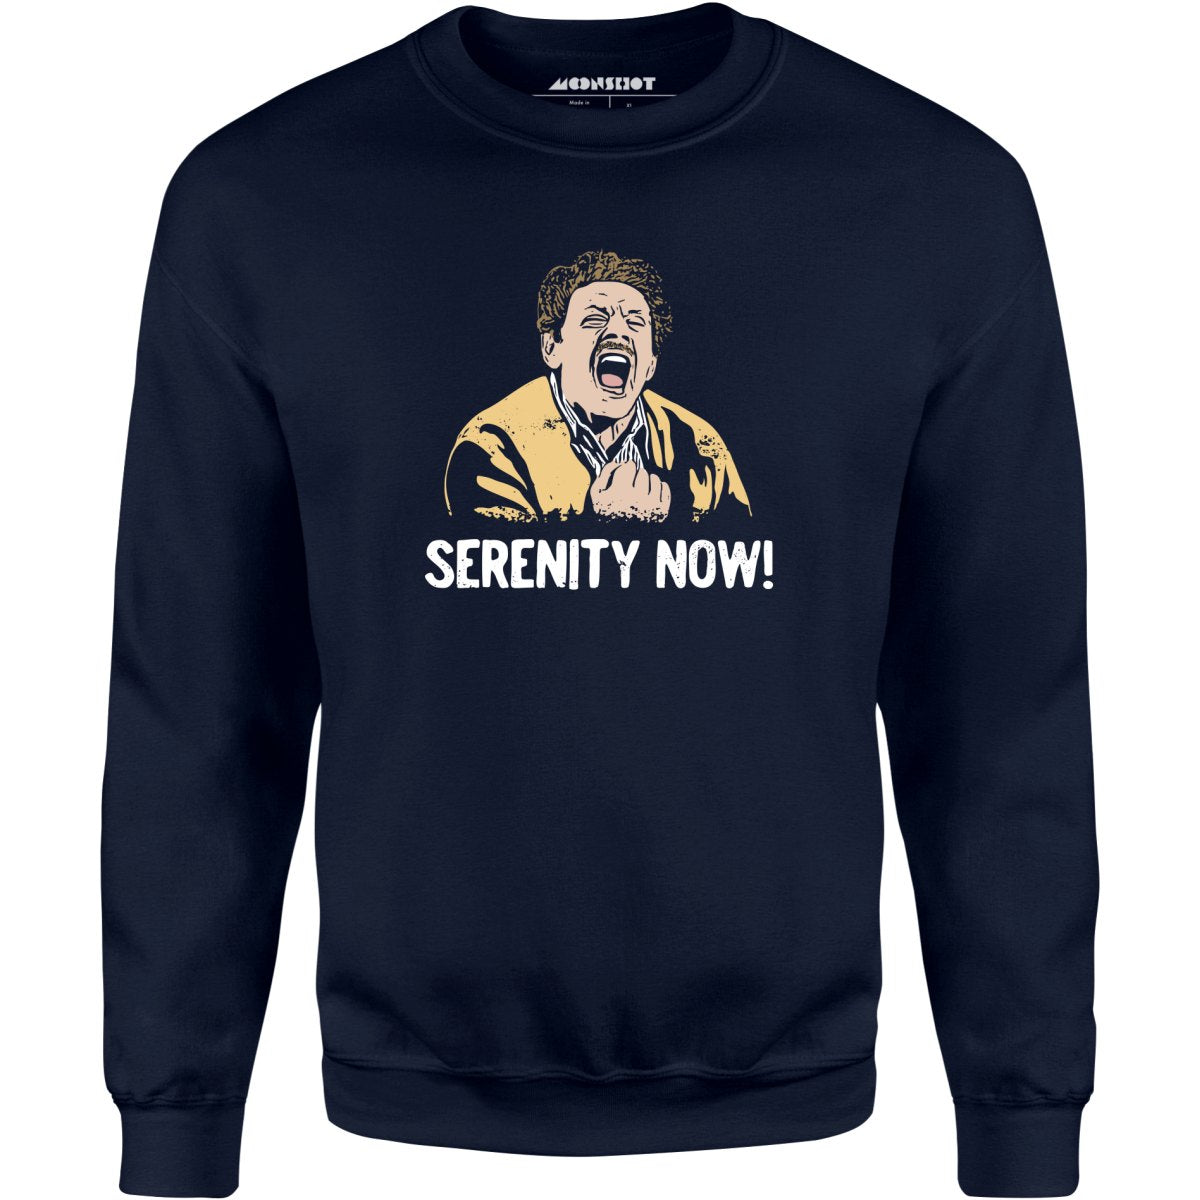 Serenity Now! - Unisex Sweatshirt